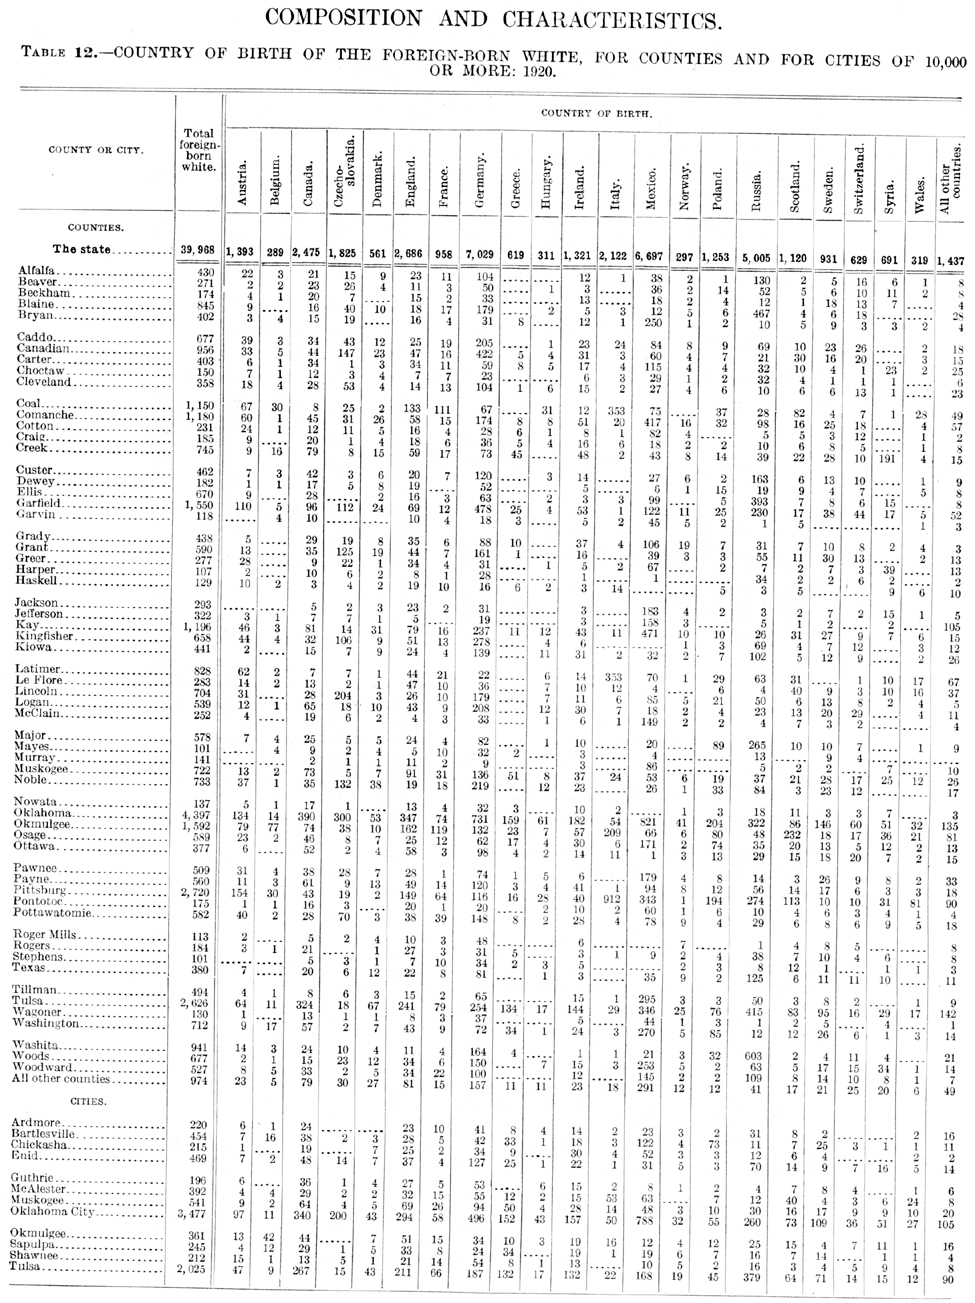 1920 Oklahoma Census, Volume 3, Table 12